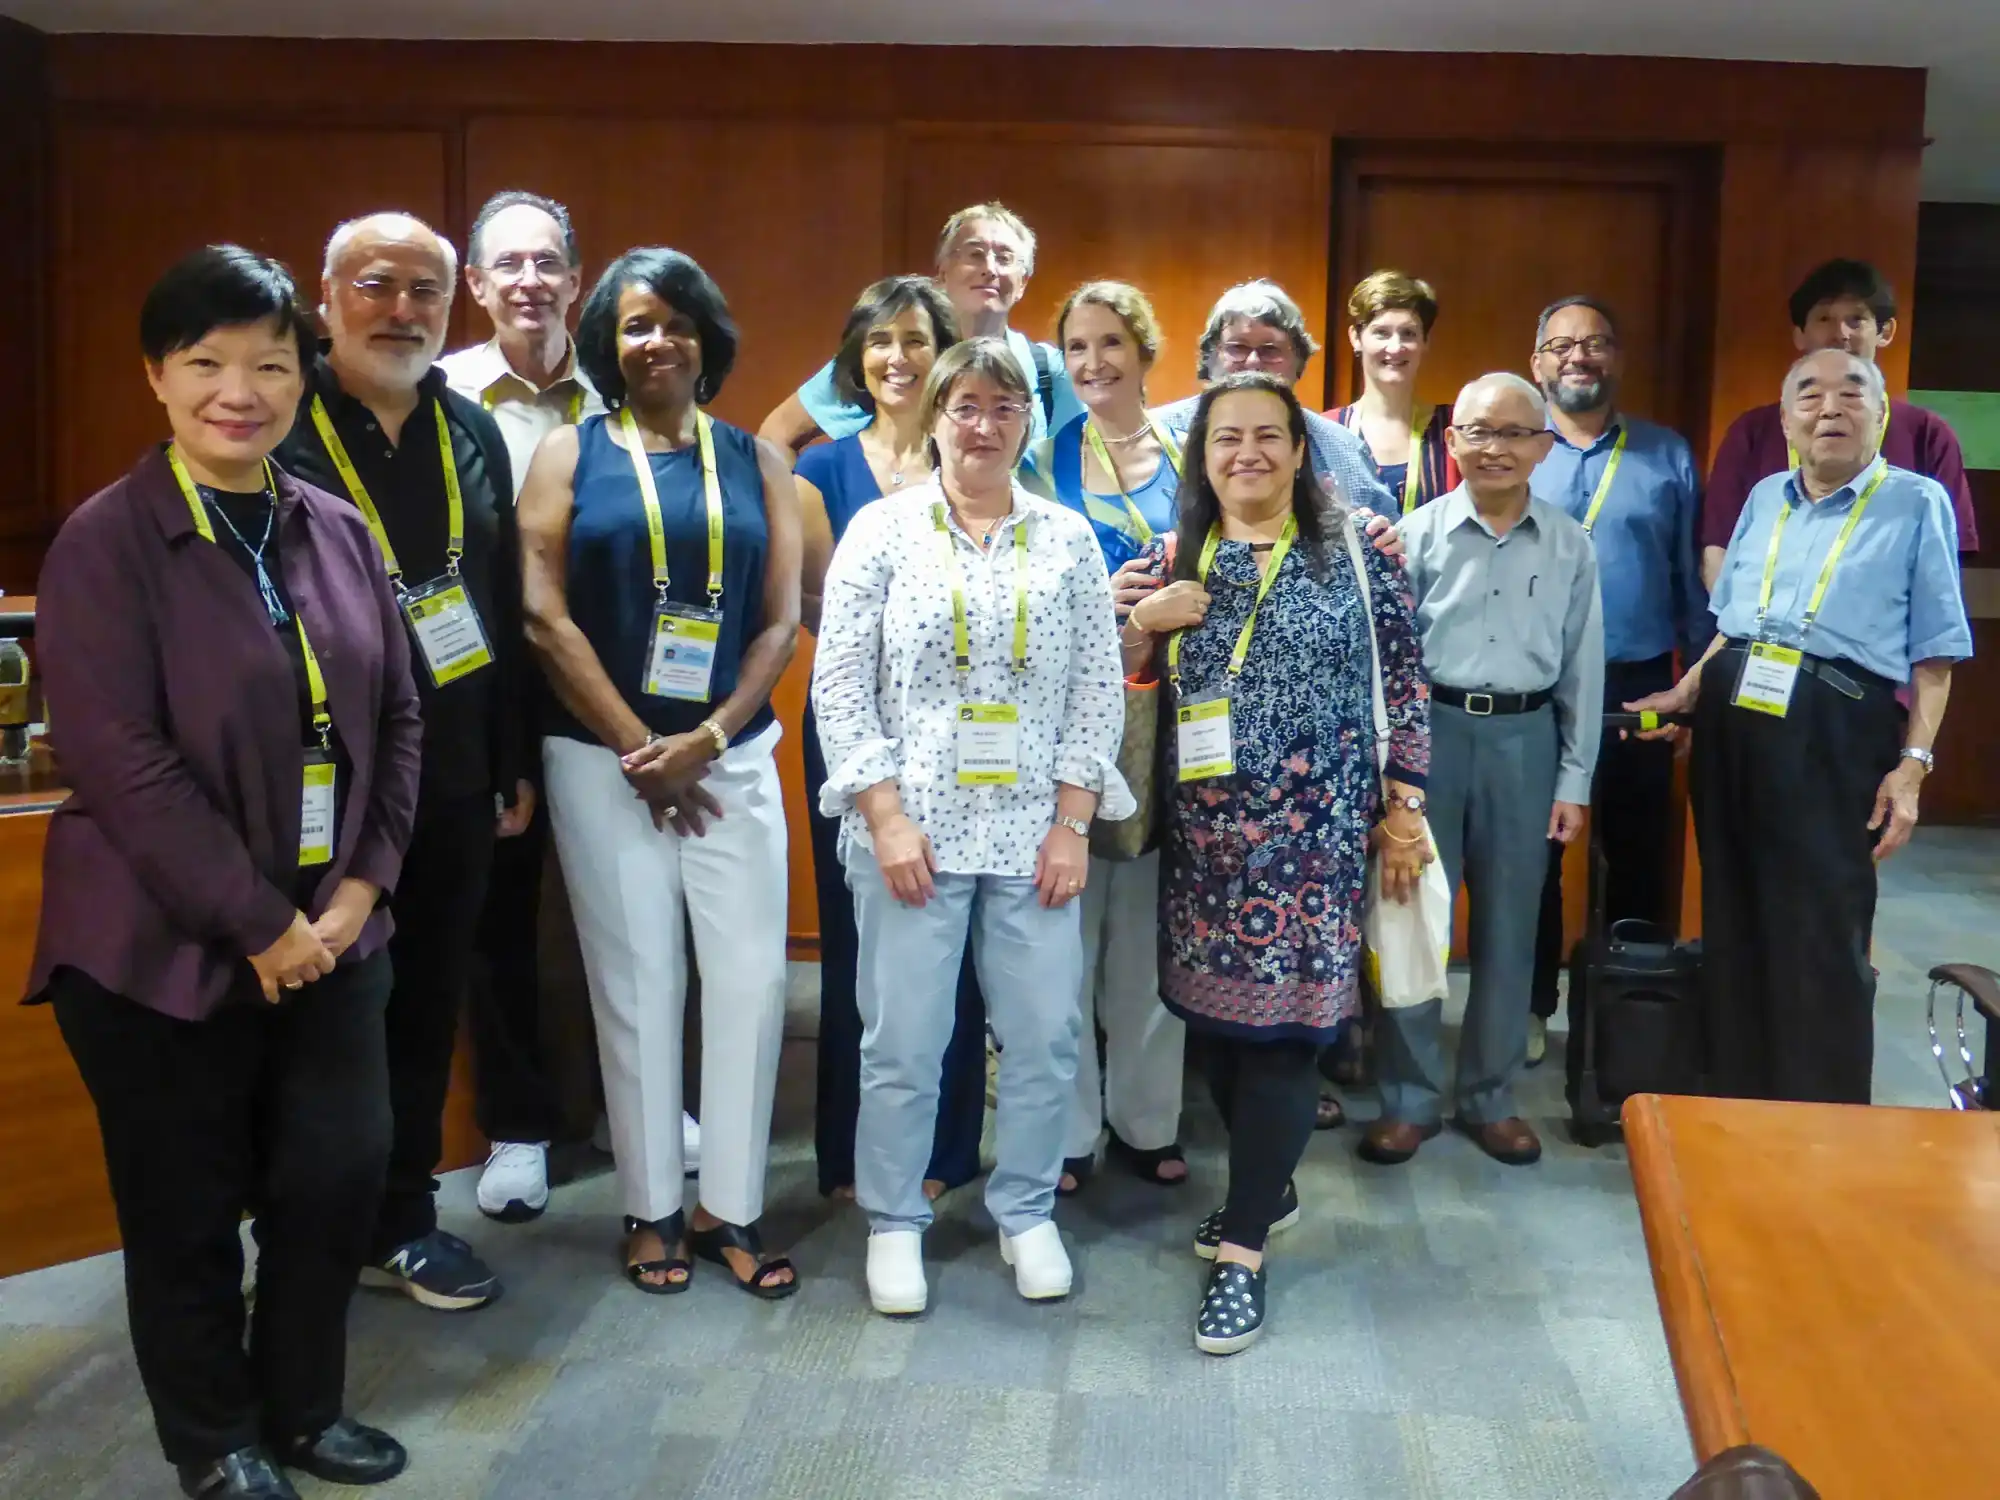 本相片攝於Interspeech 2018 in Hyderabad, India��（印度海德拉巴）中的ISCA Fellow Reception，鏡頭中的人都是ISCA Fellows 或 ISCA Board Members。李教授在第二排右二。